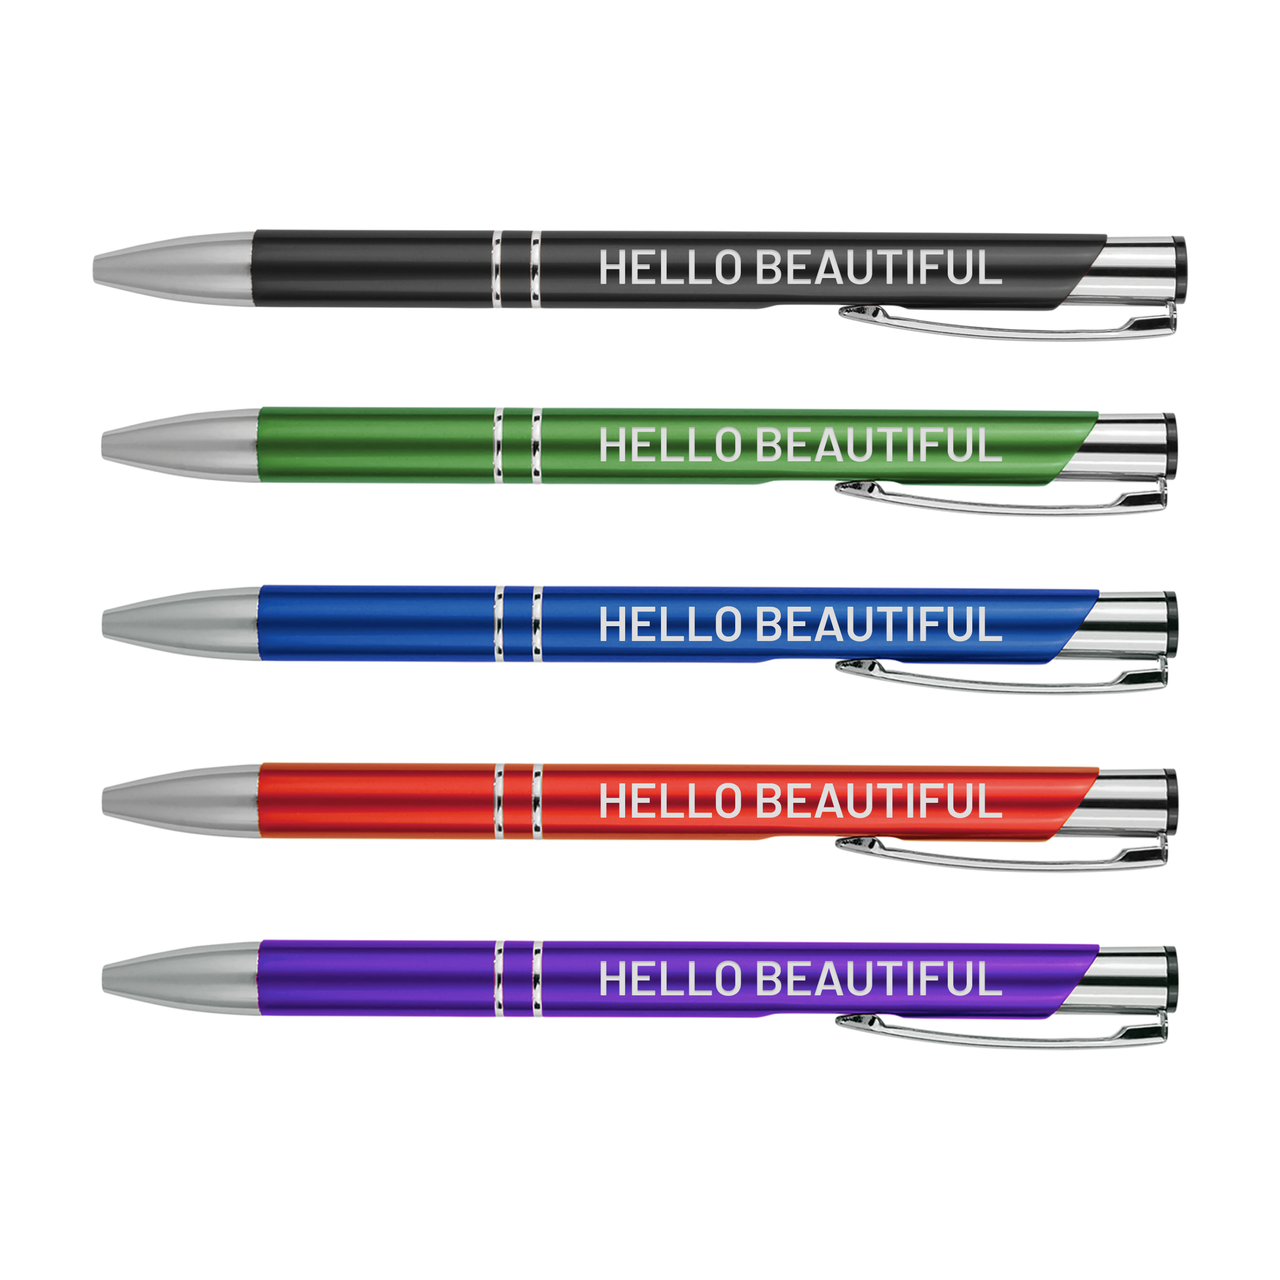 Hello Beautiful Metal Pens | Motivational Writing Tools Office Supplies Coworker Gifts Stocking Stuffer Baum Designs